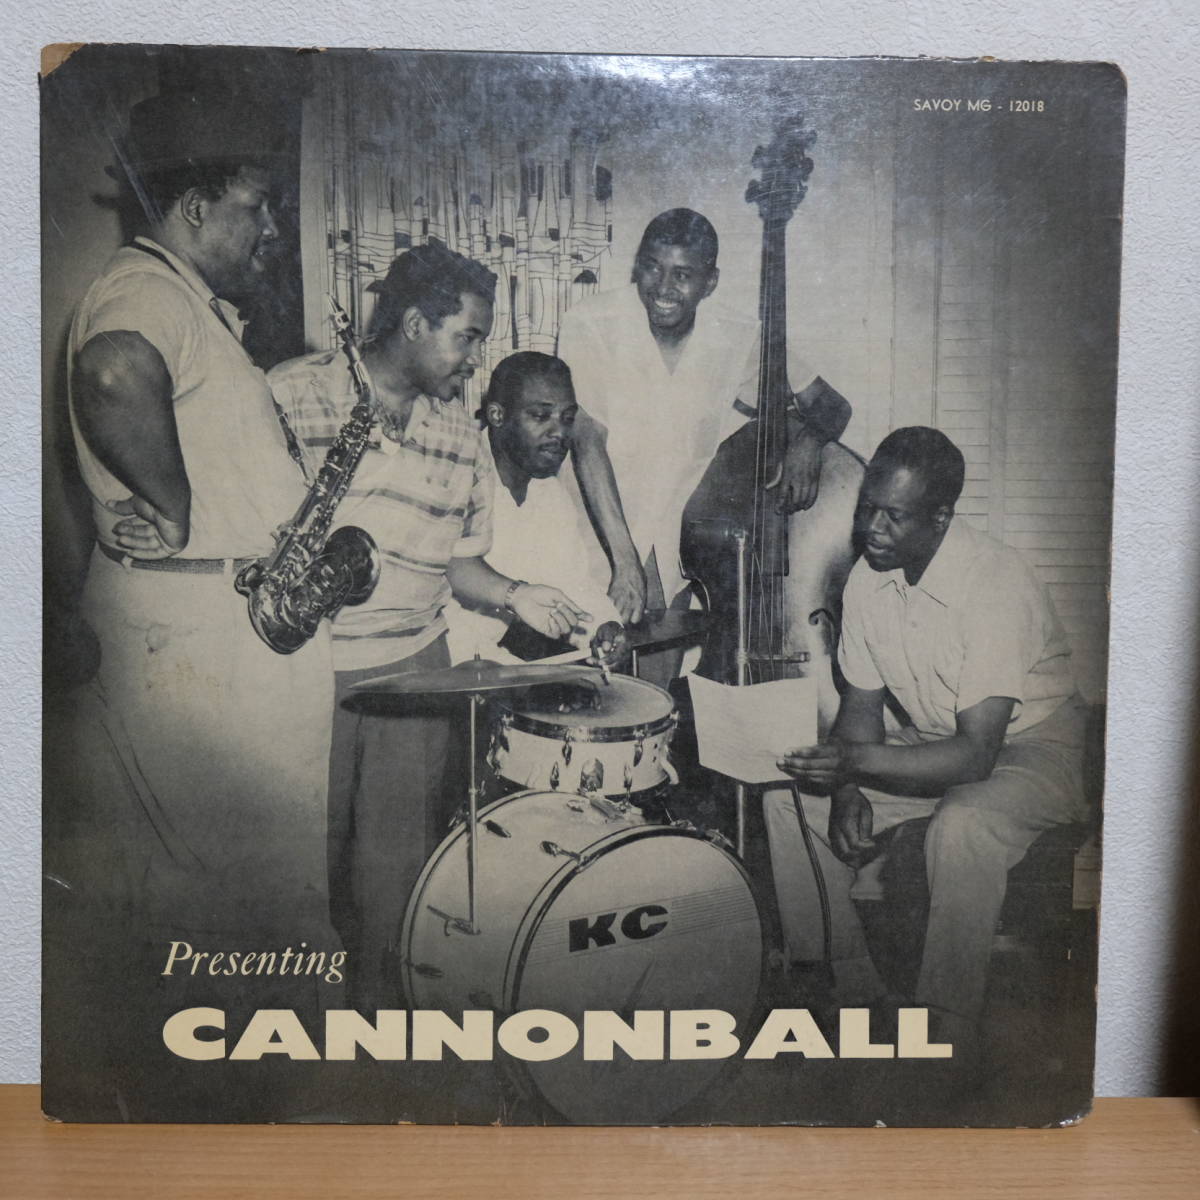 Savoy【 MG-12018 : Presenting “Cannonball” 】DG / Julian “Cannonball” Addeley_画像1